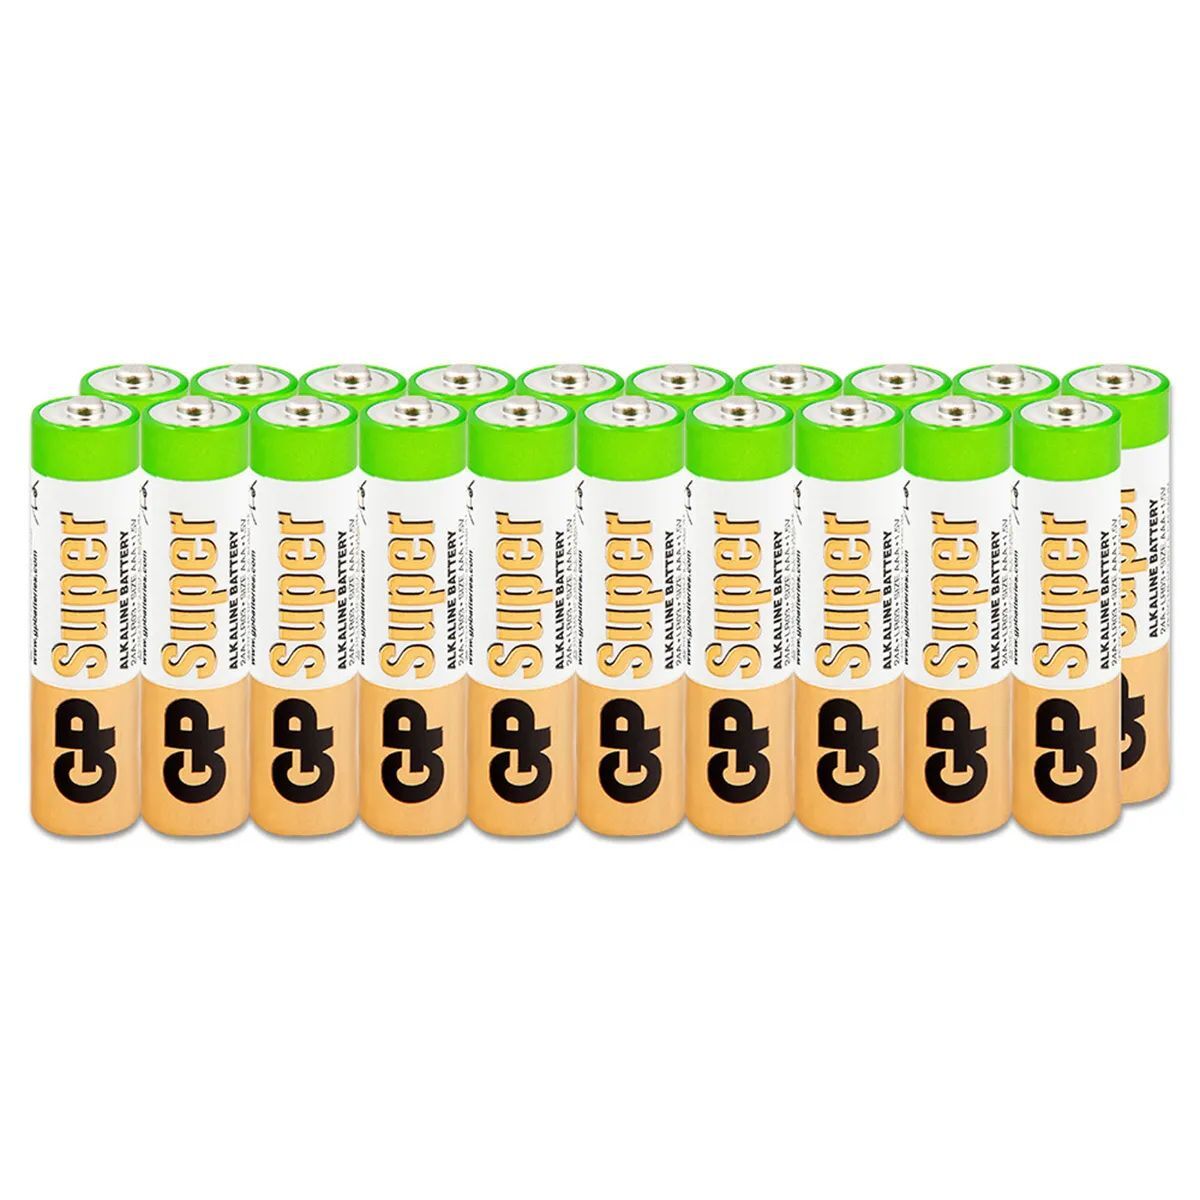 Батарейки GP Super Alkaline ААA/LR03 (мизинчиковые) упаковка 20 штук usb батарейки nimh типа ааа 2 шт